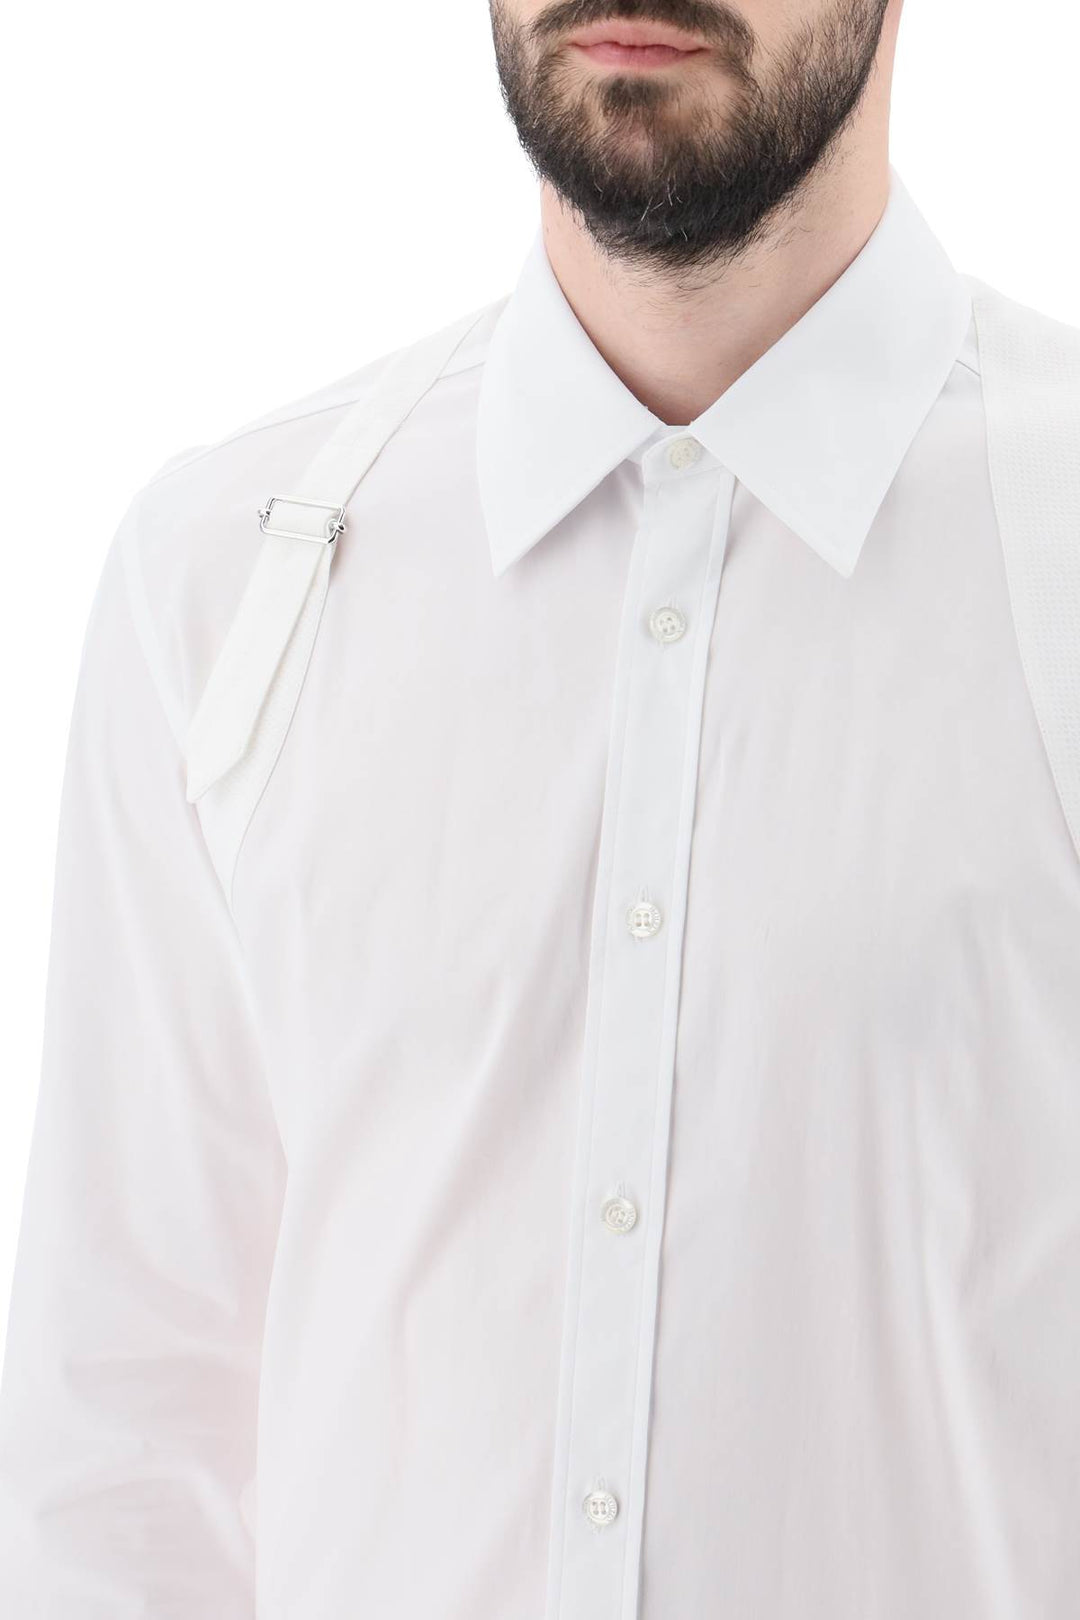 stretch cotton harness shirt-3